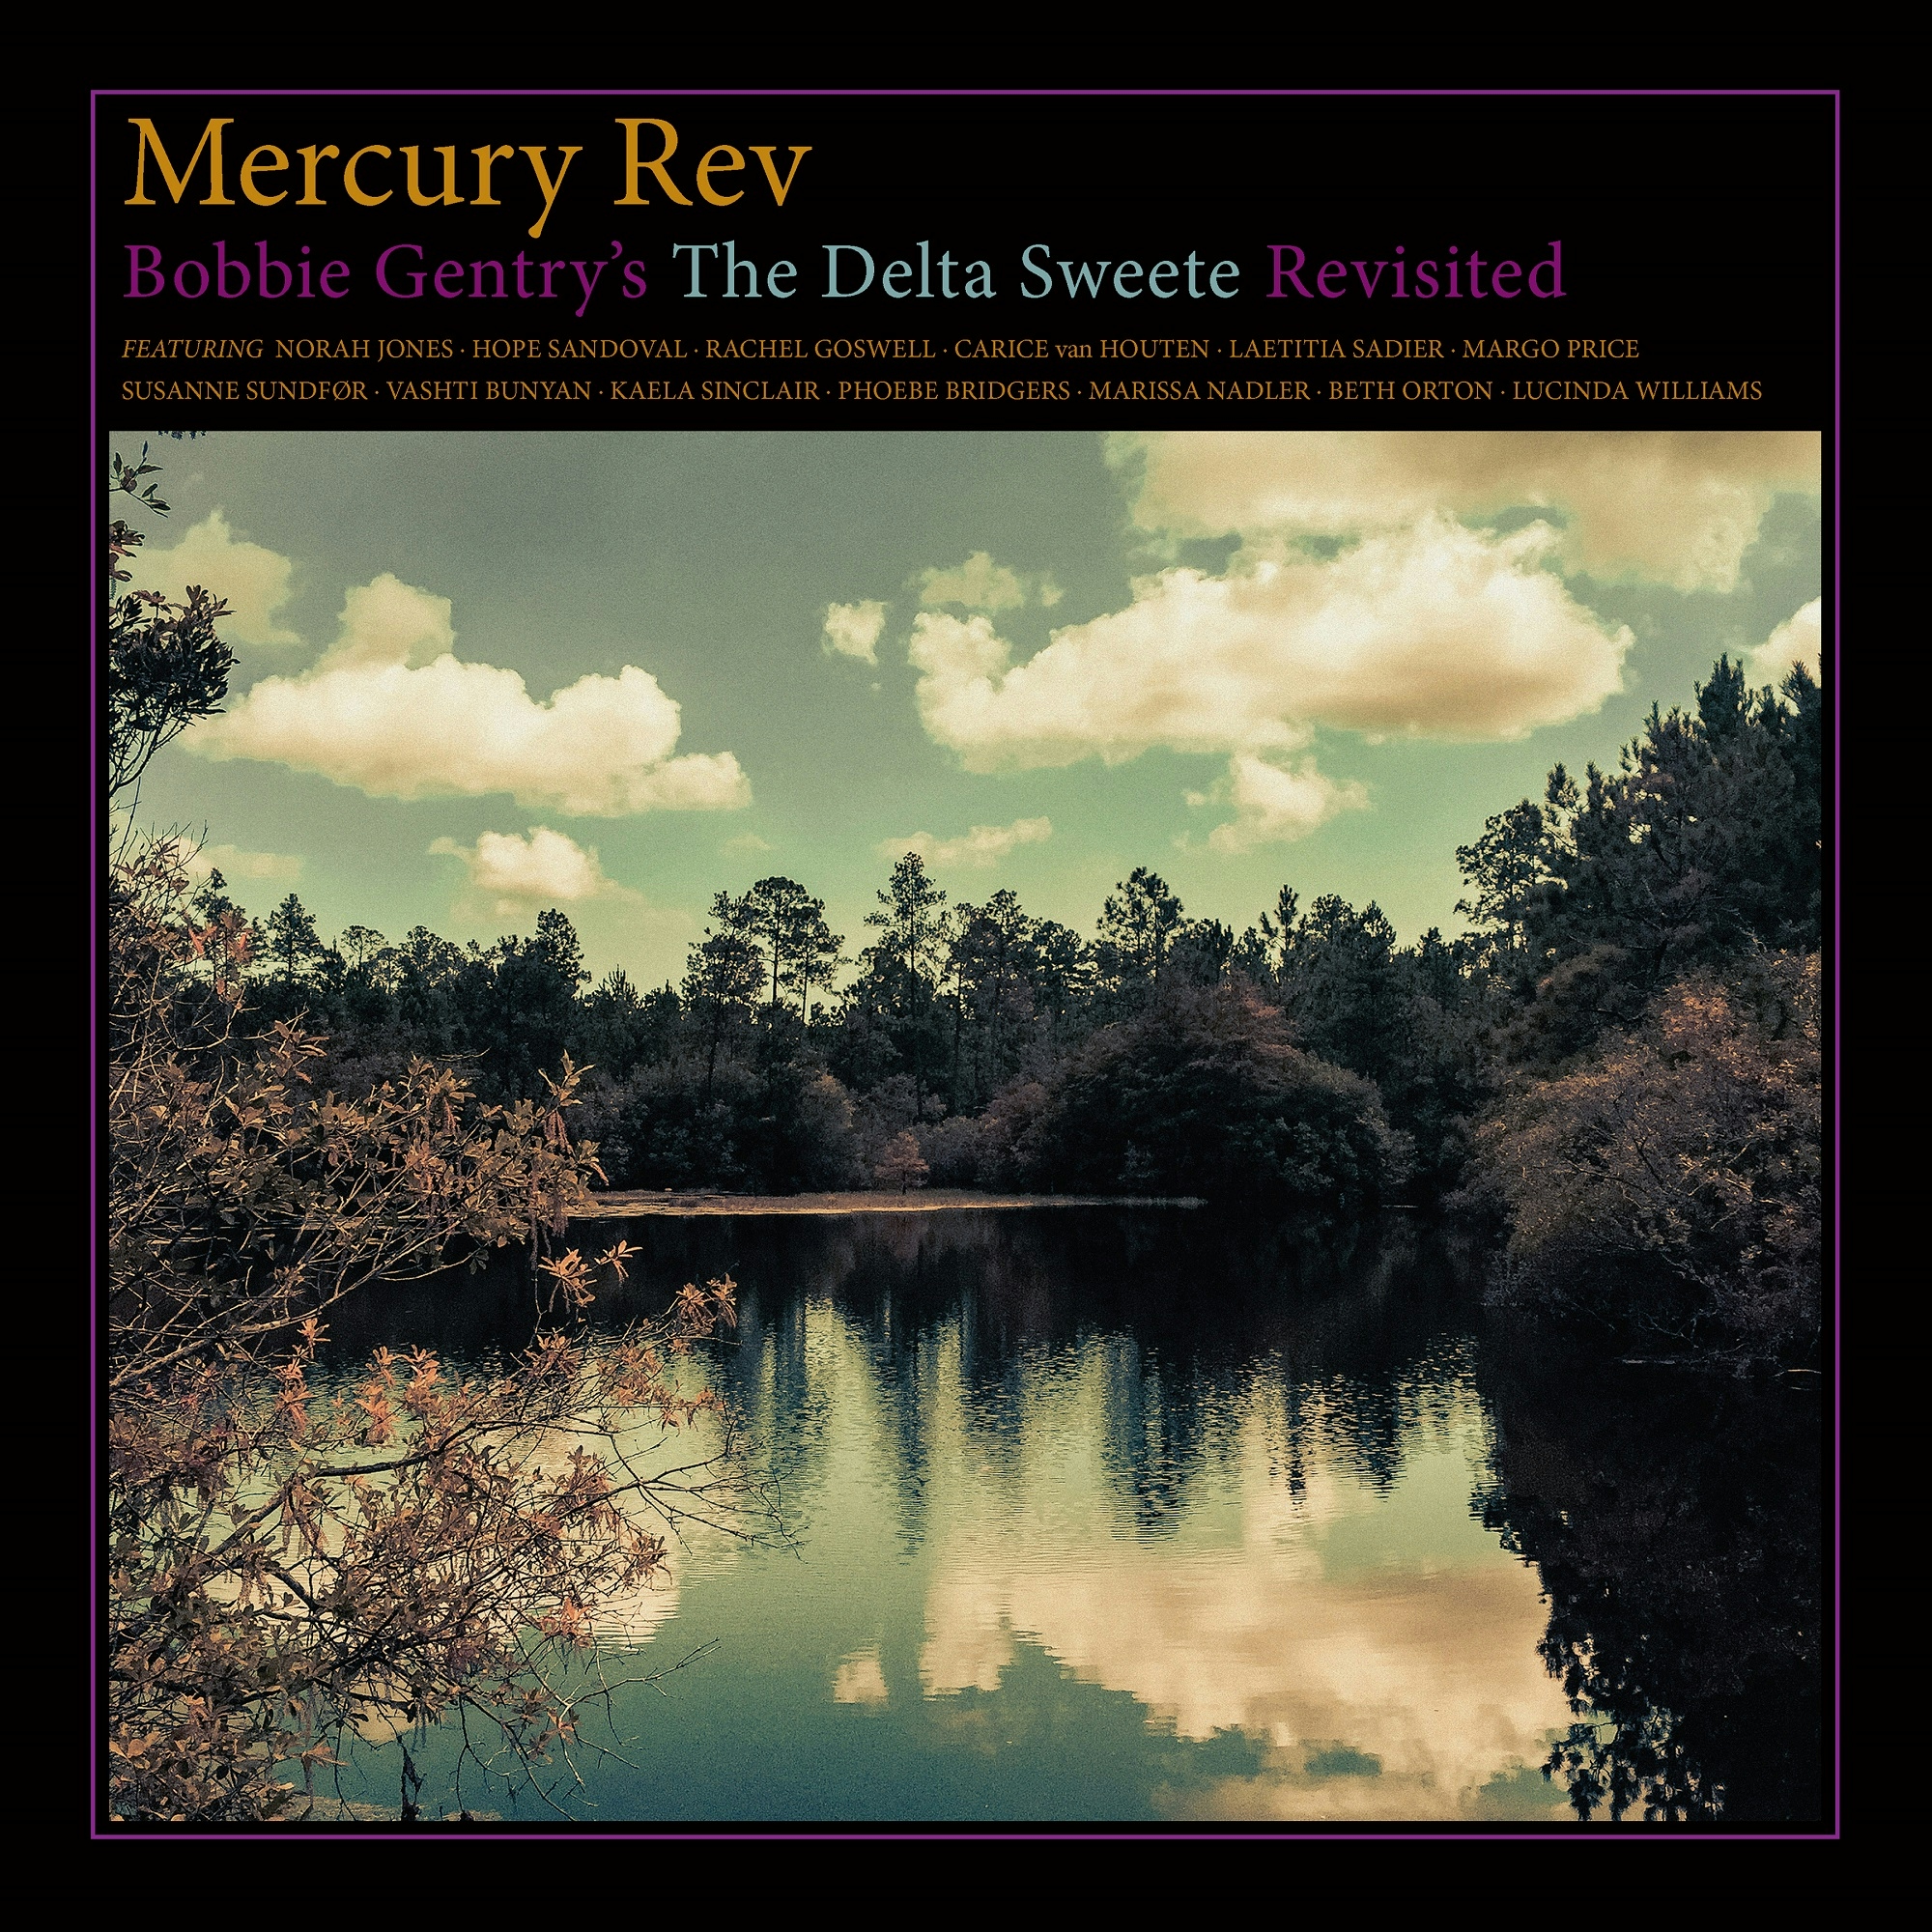 Album artwork for Album artwork for Bobbie Gentry’s The Delta Sweete Revisited by Mercury Rev by Bobbie Gentry’s The Delta Sweete Revisited - Mercury Rev